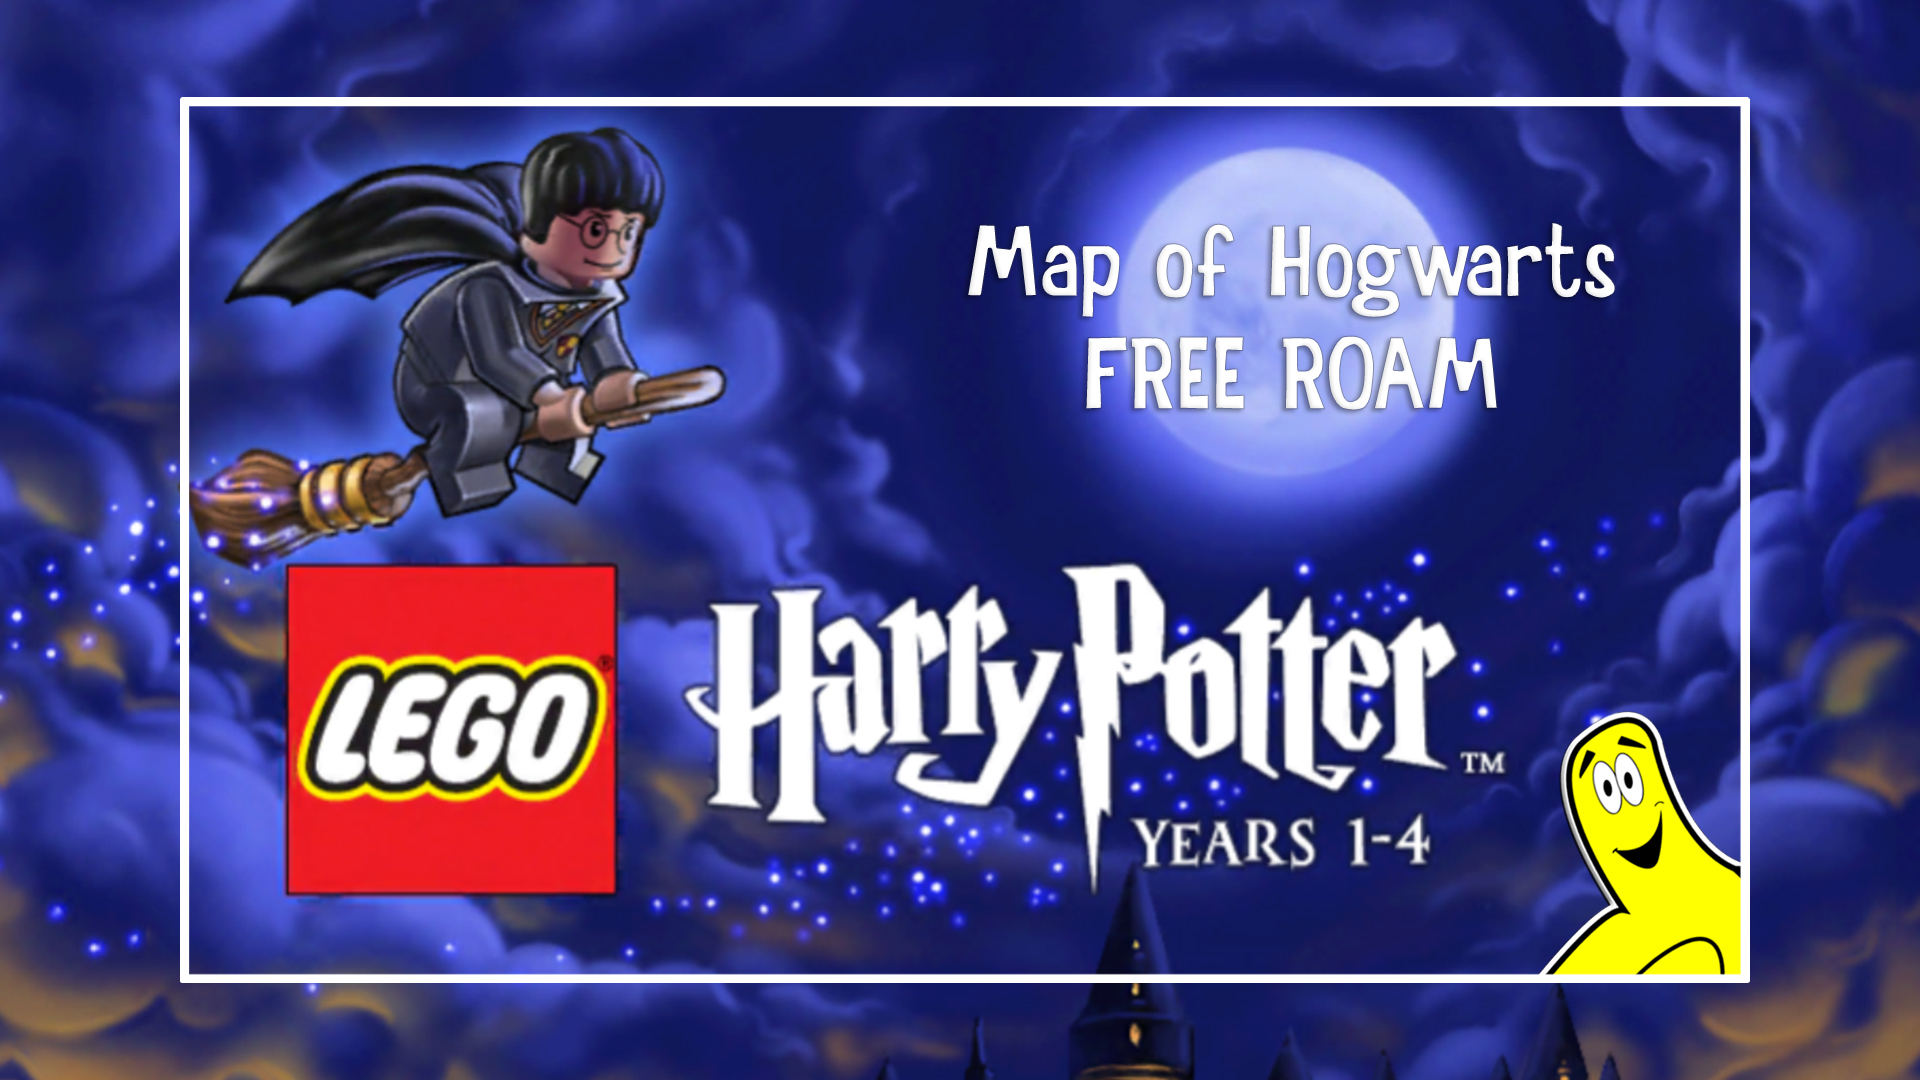 Lego Harry Potter Years 1-4 FREE ROAM Map